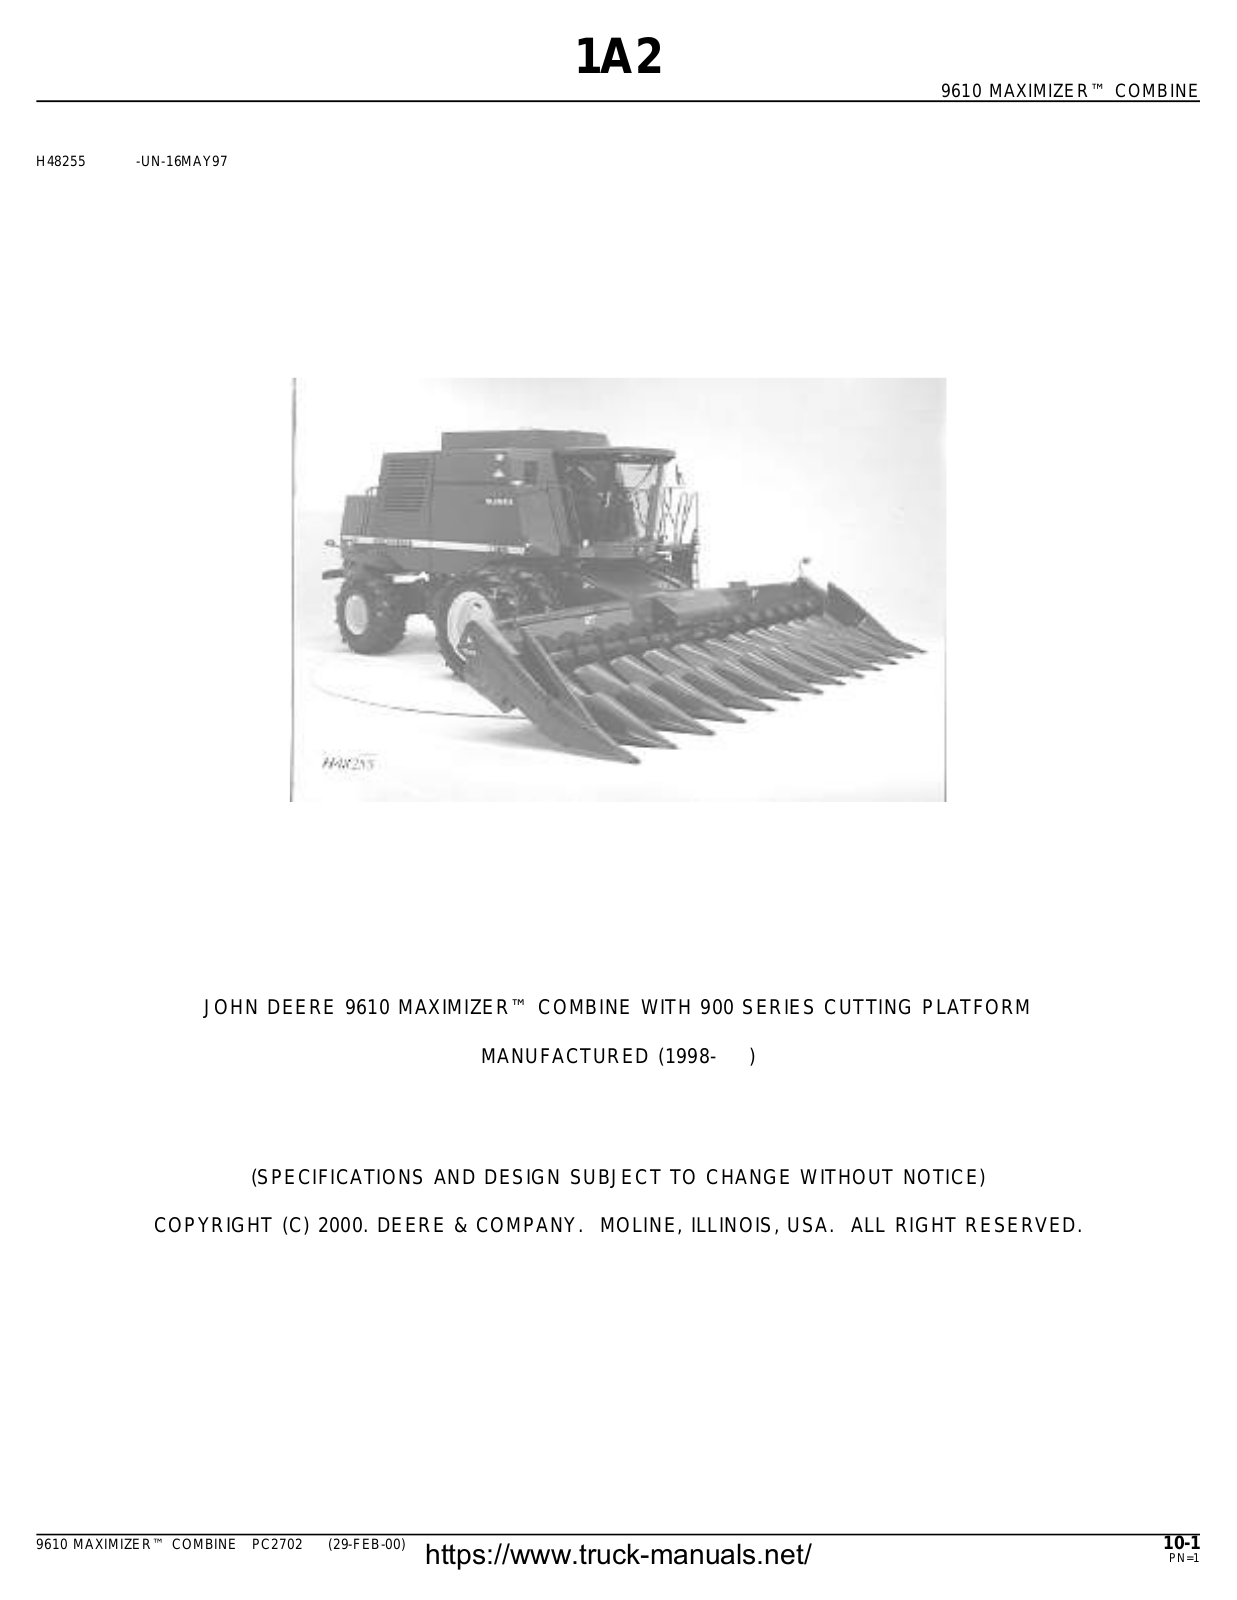 John Deere 9610 Parts Catalog